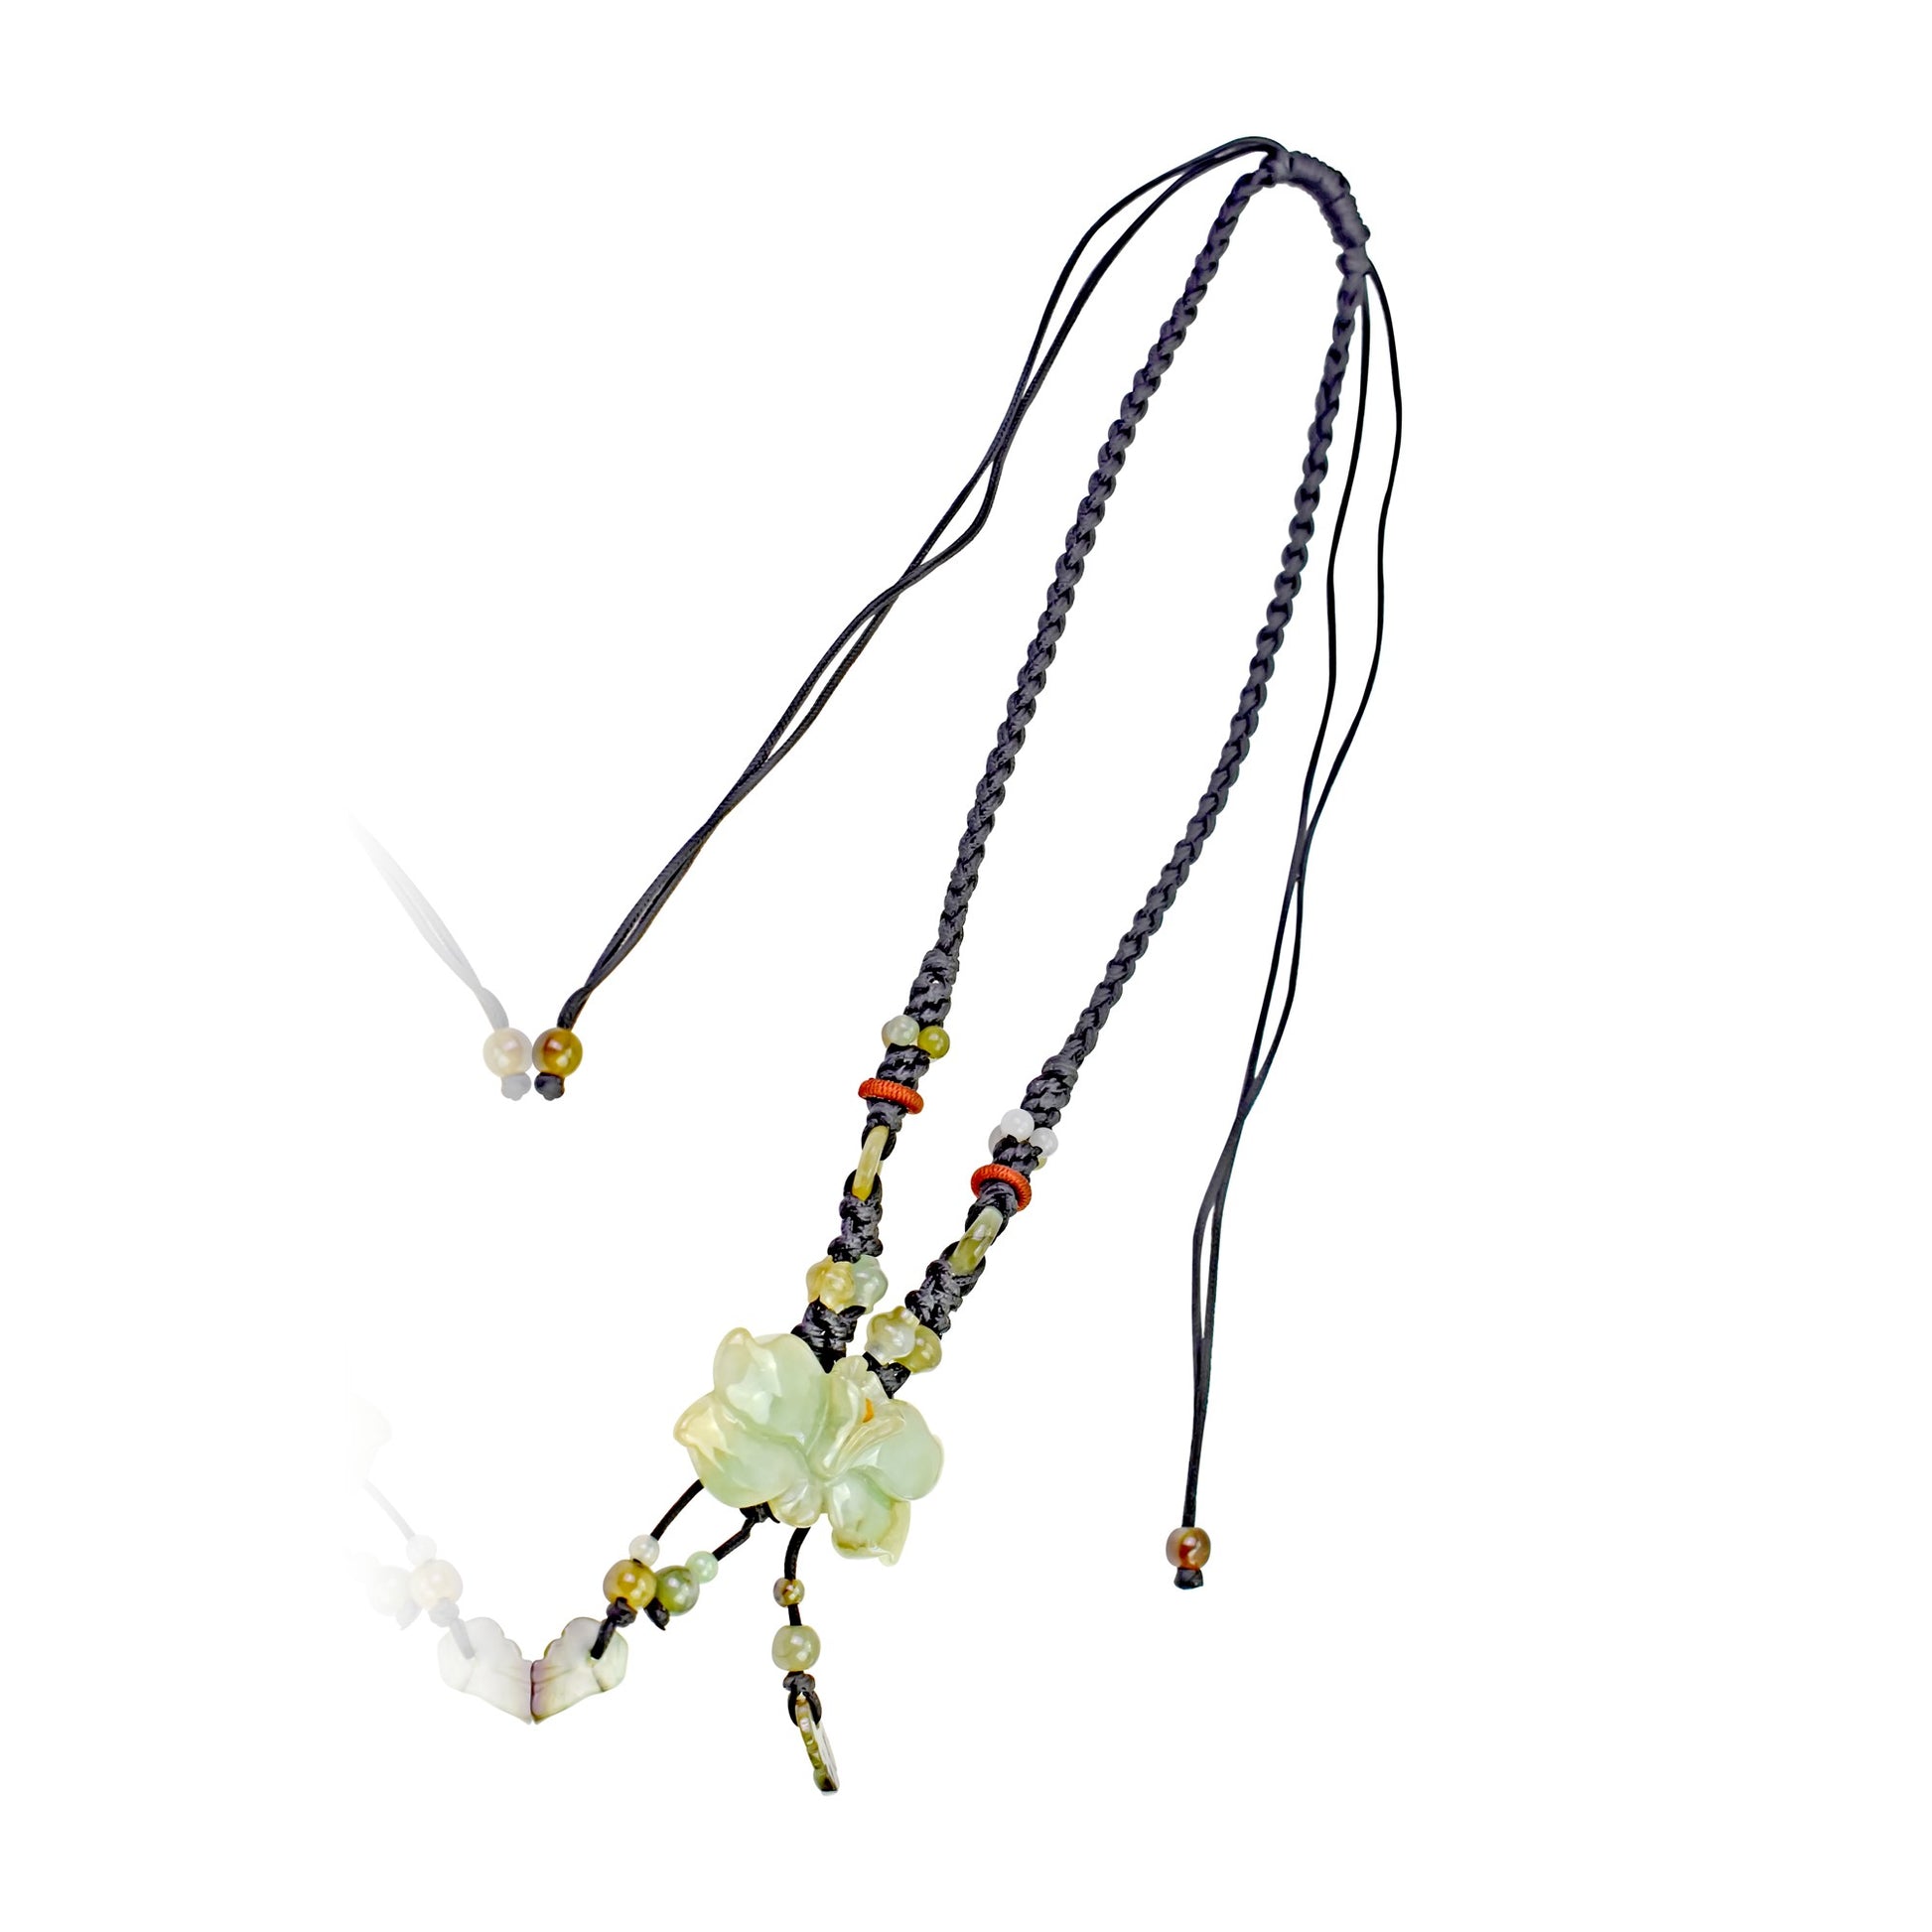 Beautifully Accessorized Wild Indigo Flower Handmade Jade Necklace with Black Cord